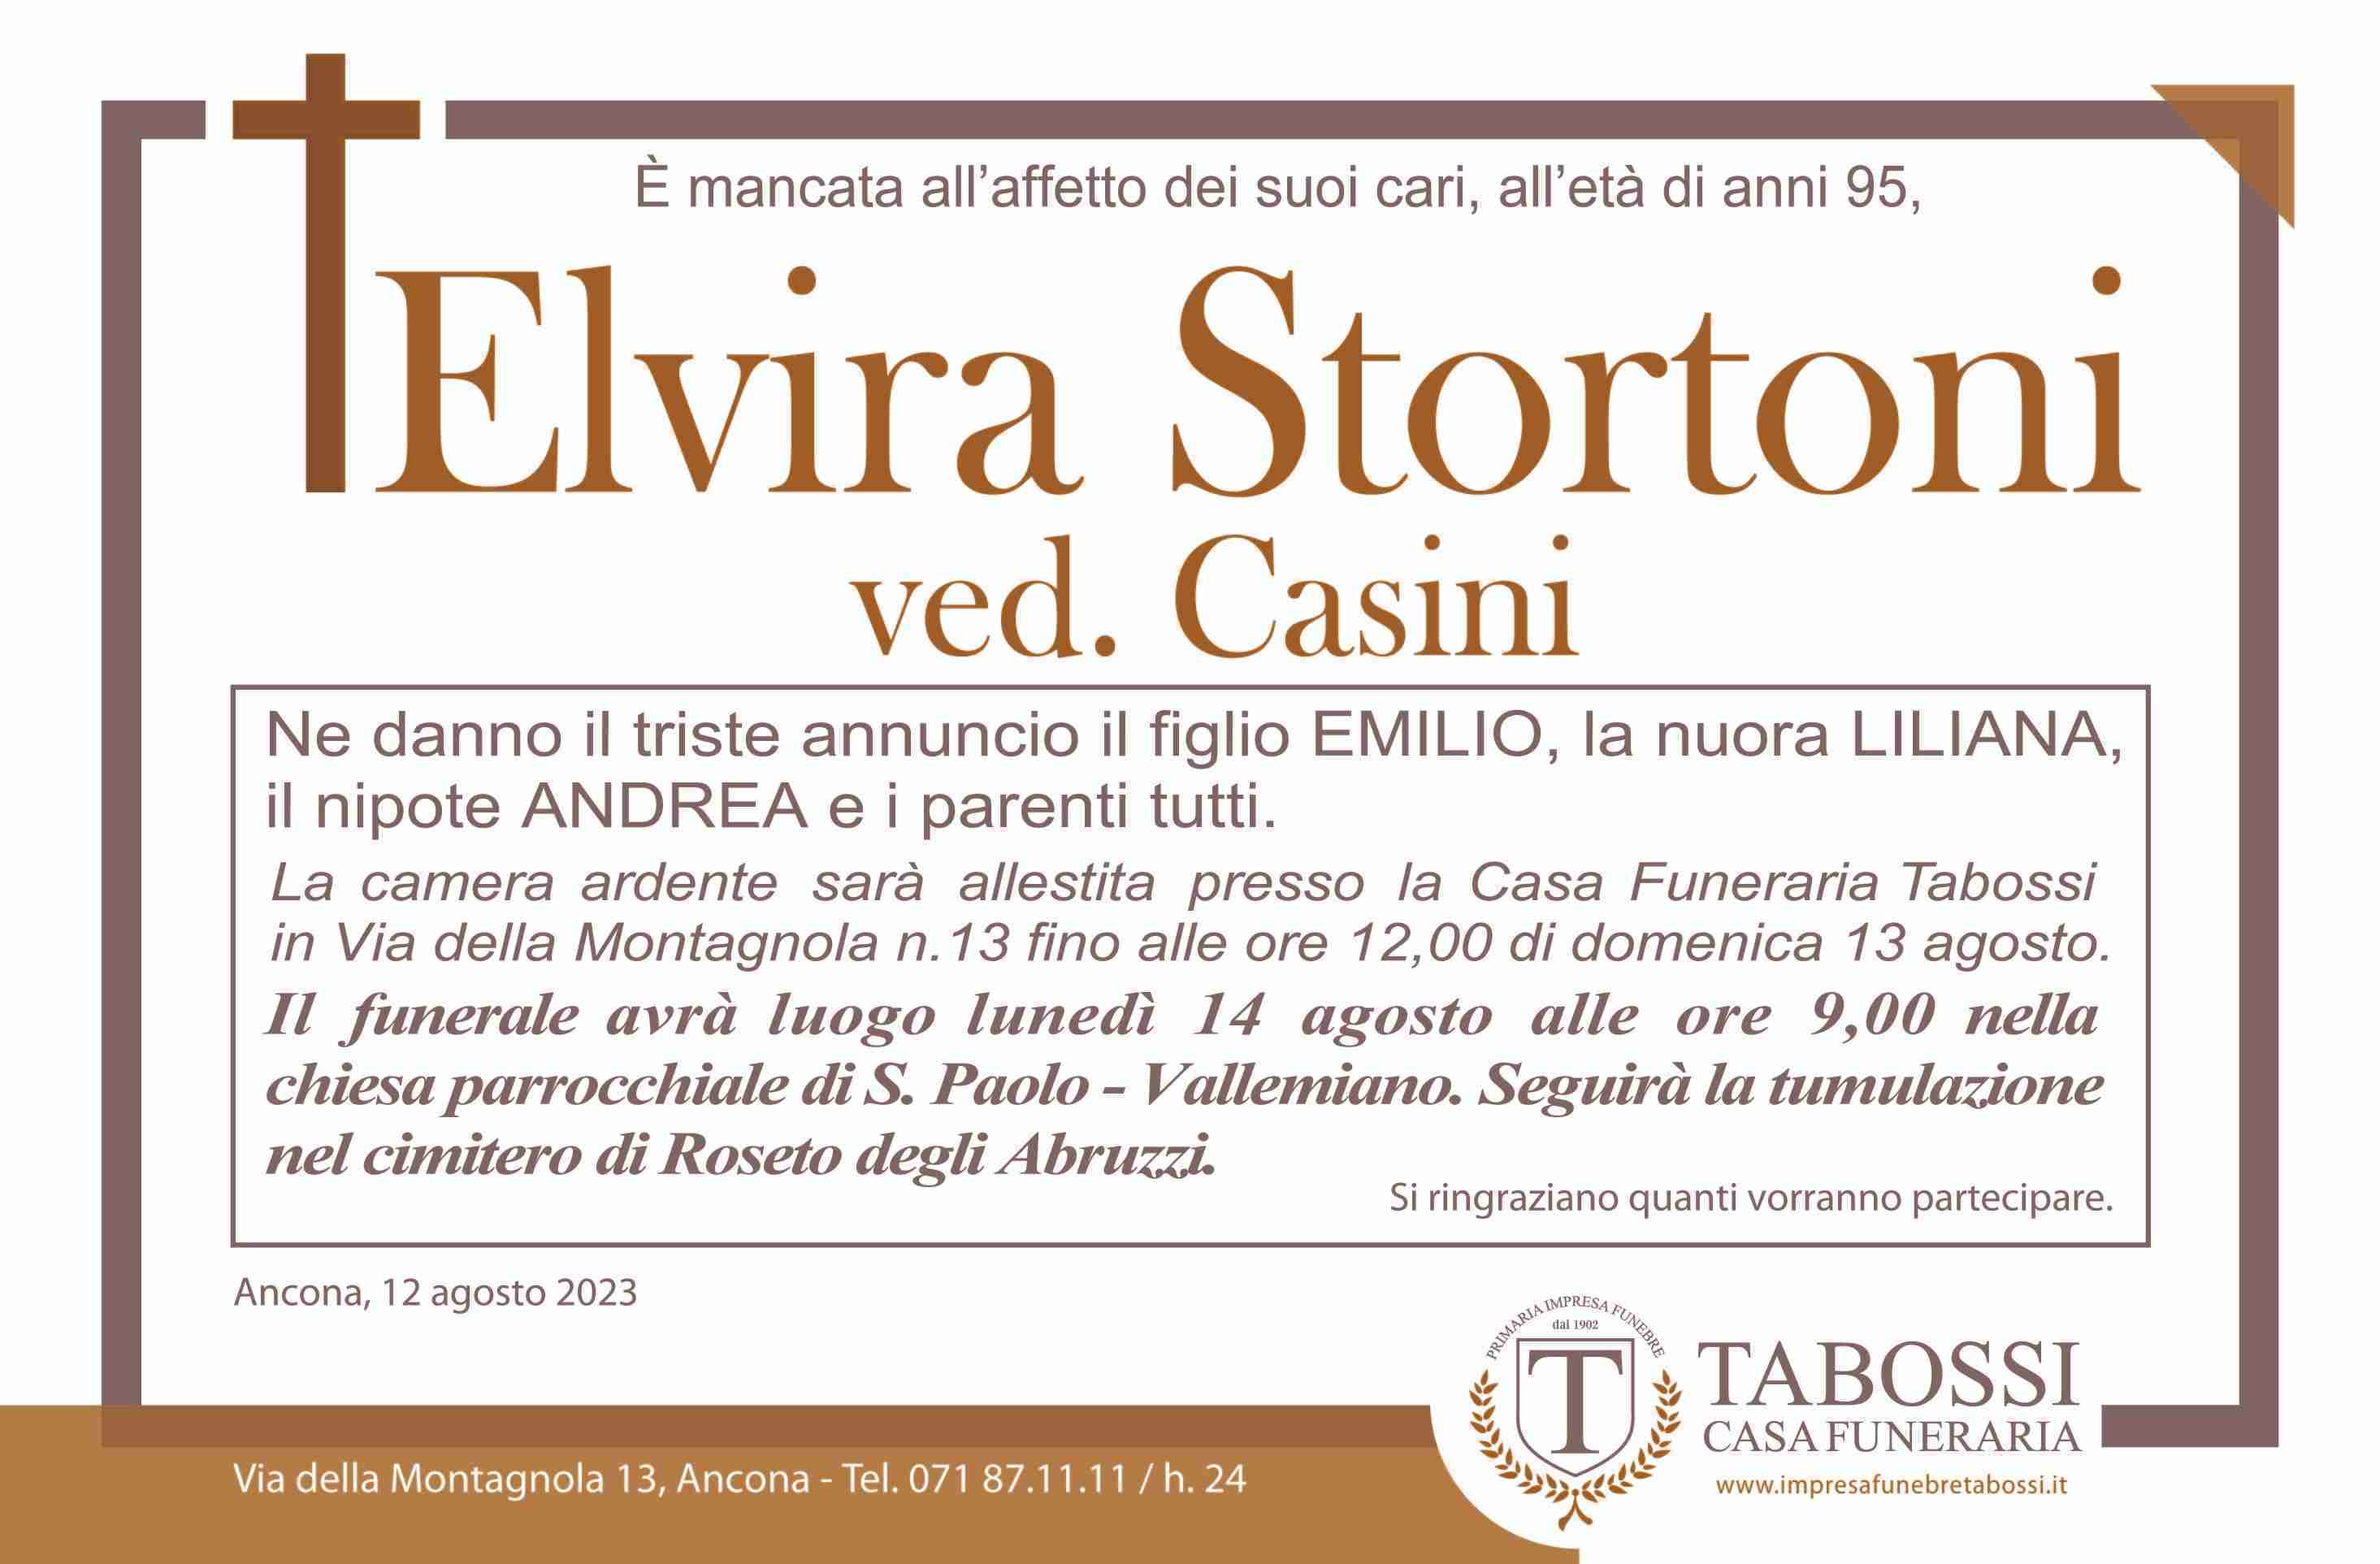 Elvira Stortoni